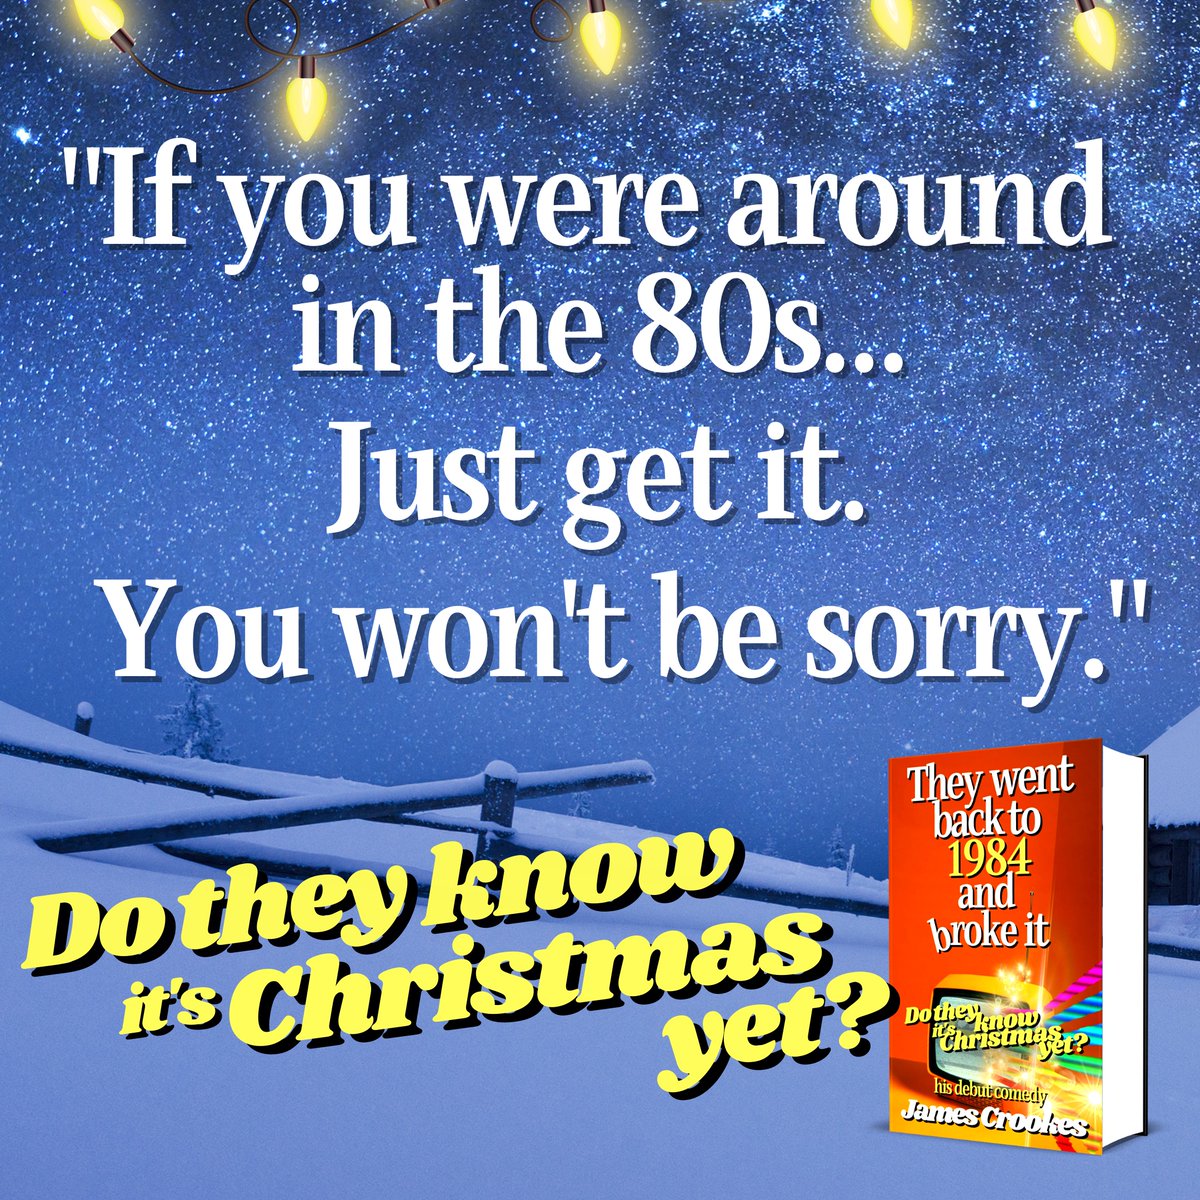 #ChristmasGift #Eighties #ComedyNovel

amazon.co.uk/They-Know-Its-…